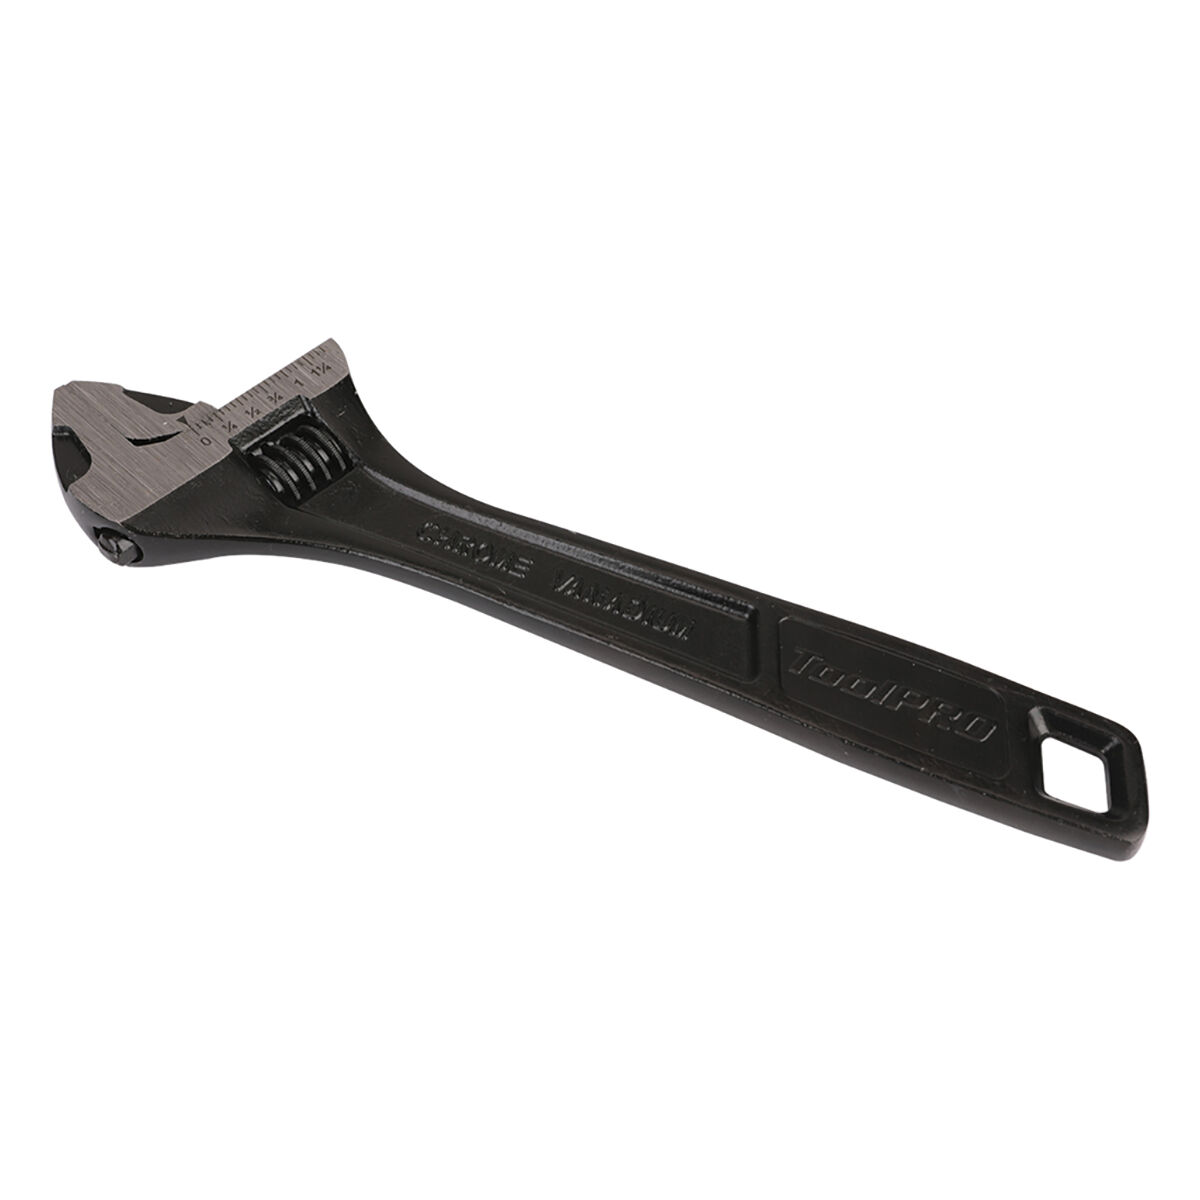 ToolPRO Adjustable Wrench 250mm Heavy Duty Black, , scaau_hi-res